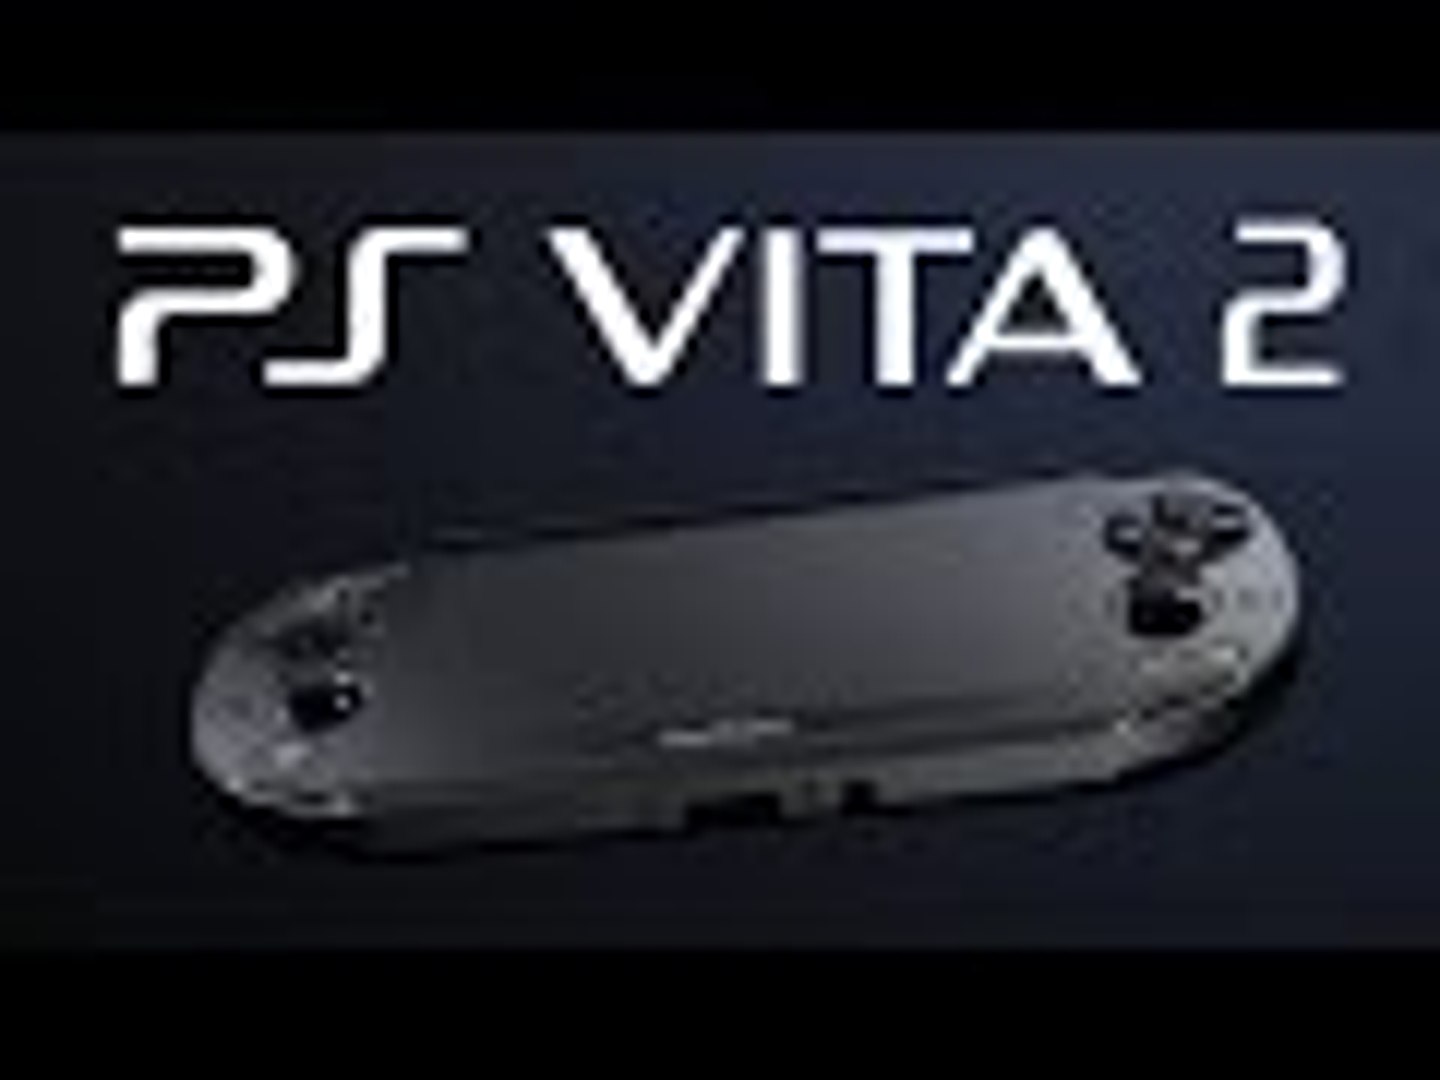 Ps Vita 2 Rumors Future Of The Playstation Vita 16 Video Dailymotion